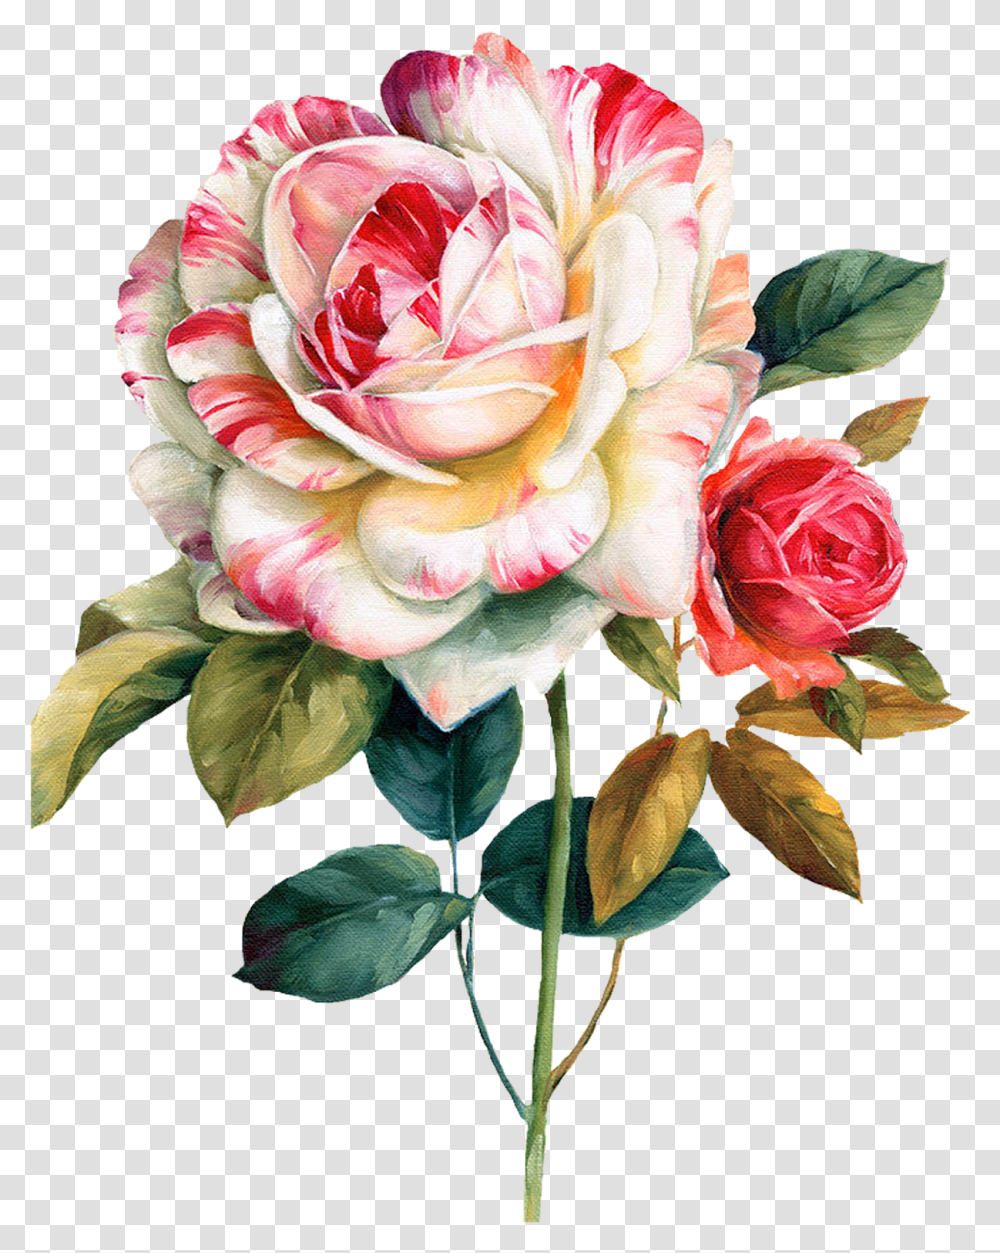 Flowers Image For Decoupage, Rose, Plant, Blossom, Petal Transparent Png